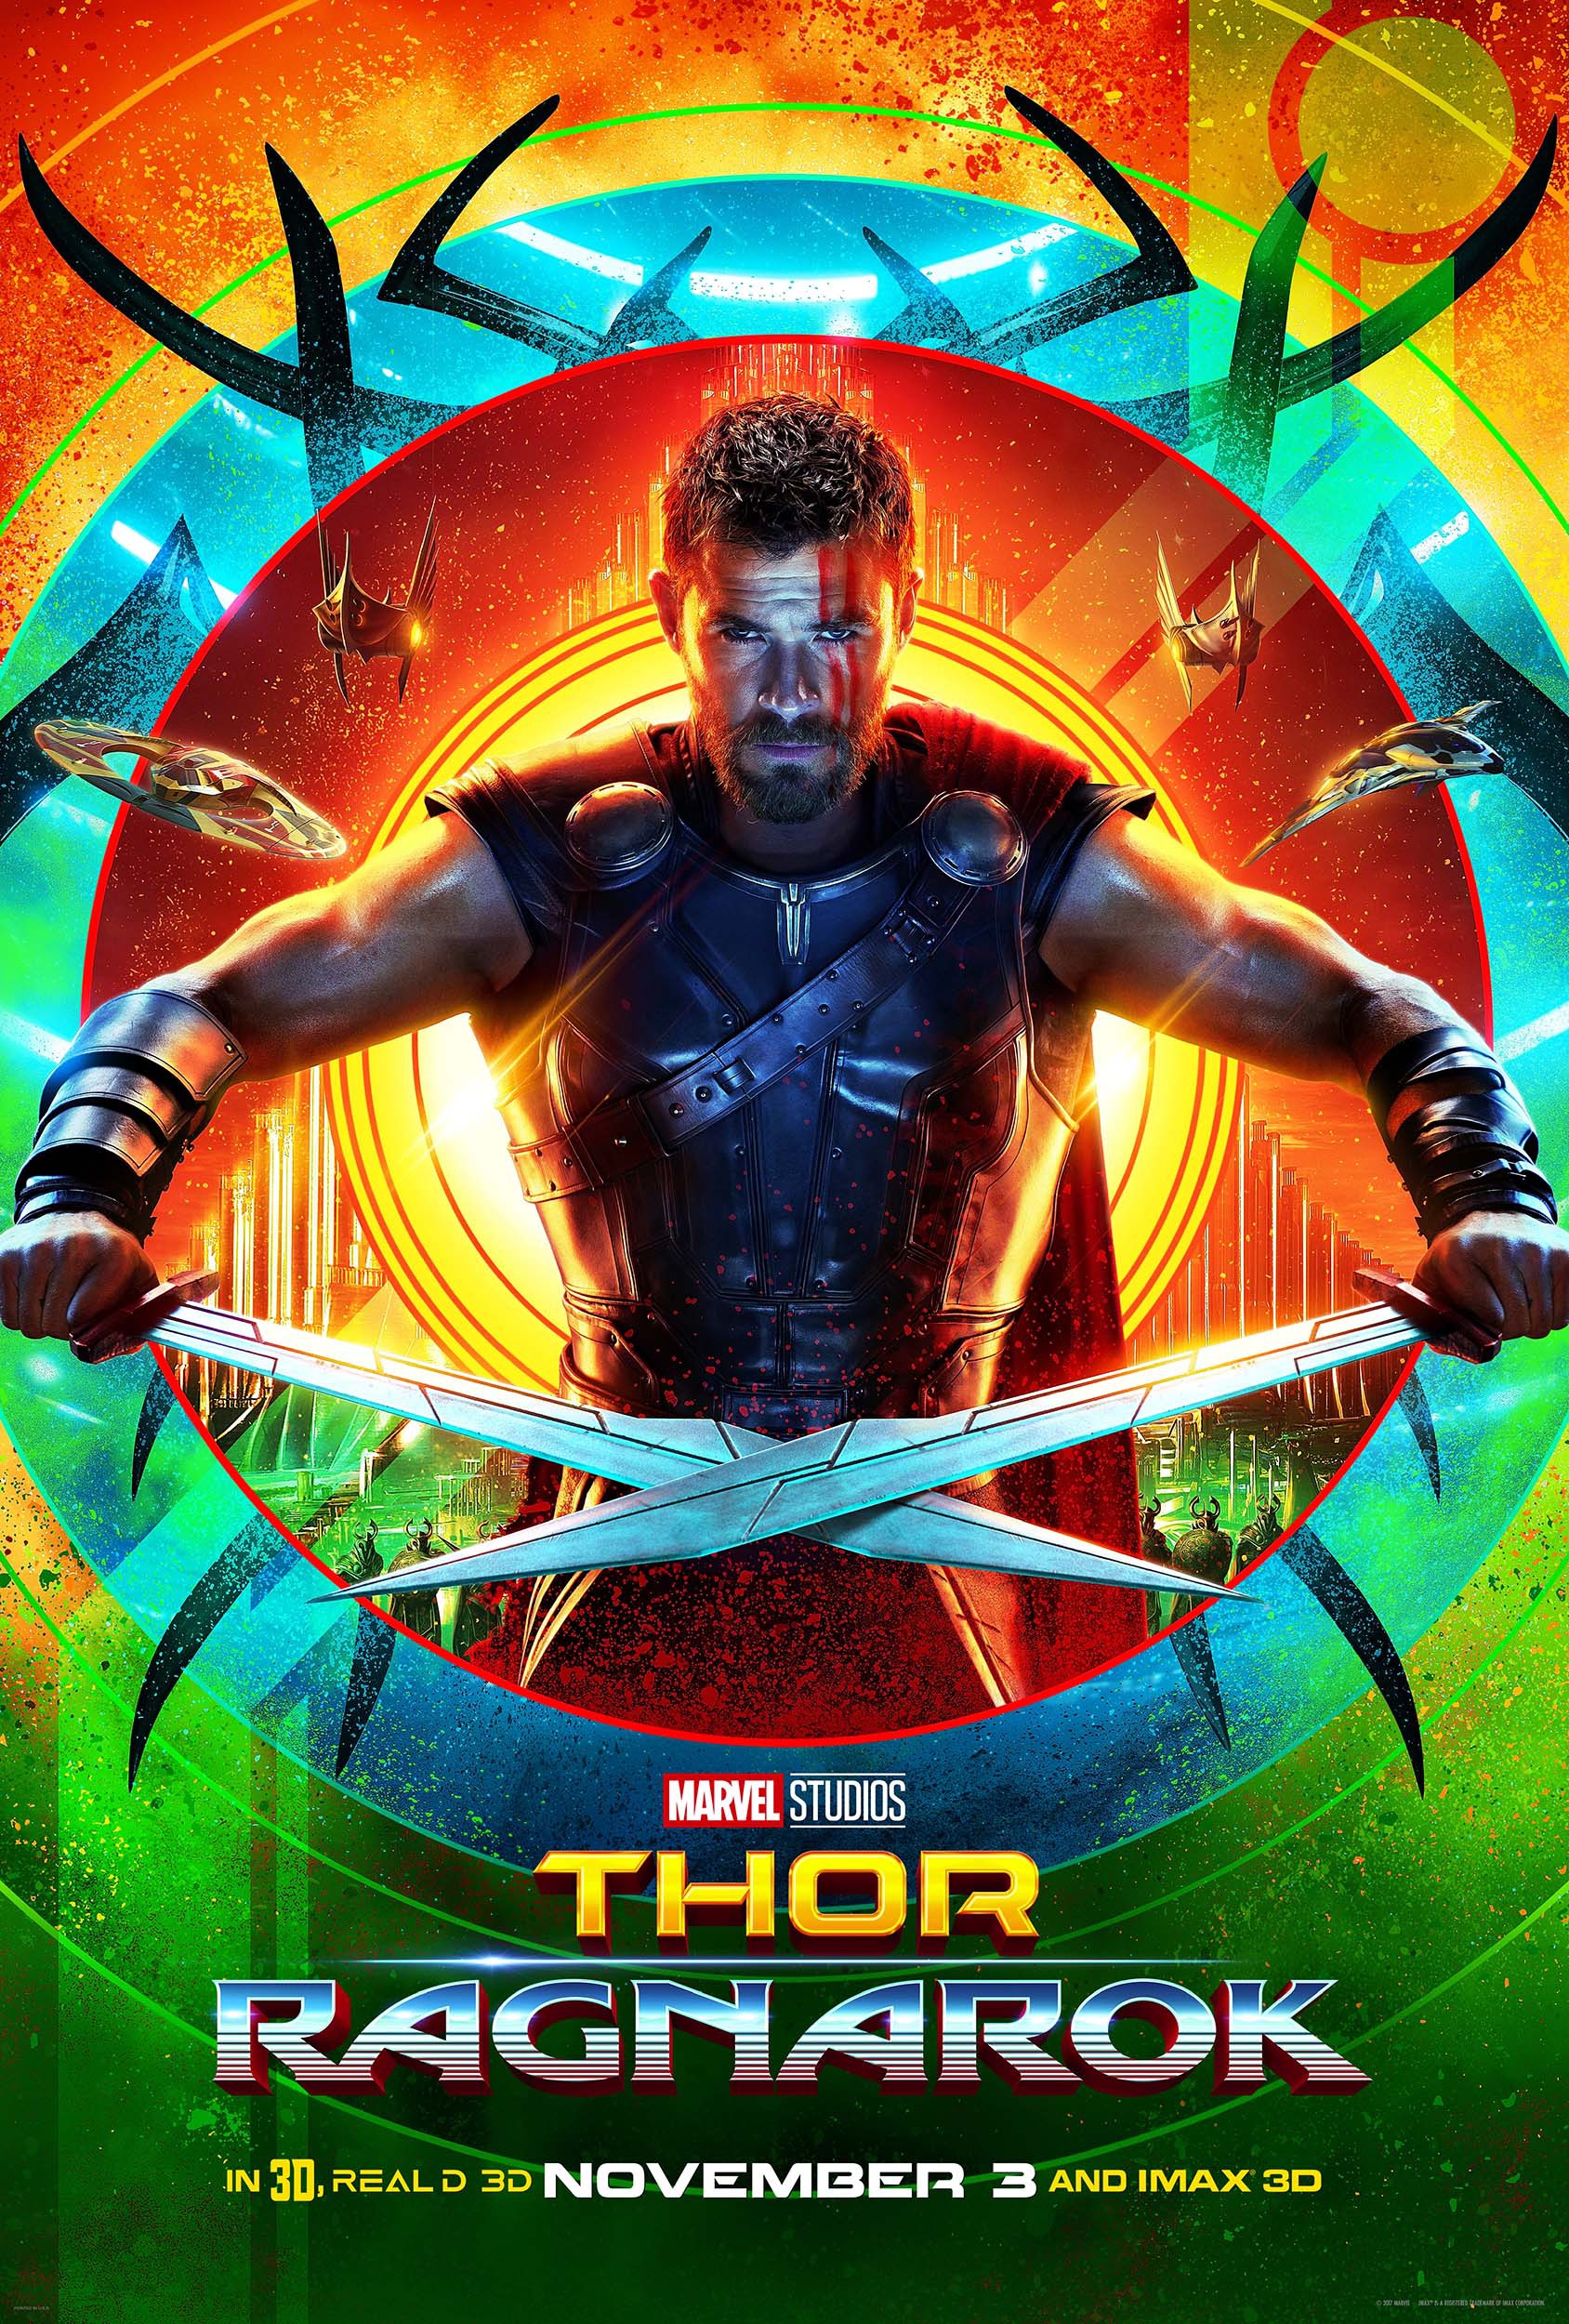 instal the new version for ipod Thor: Ragnarok